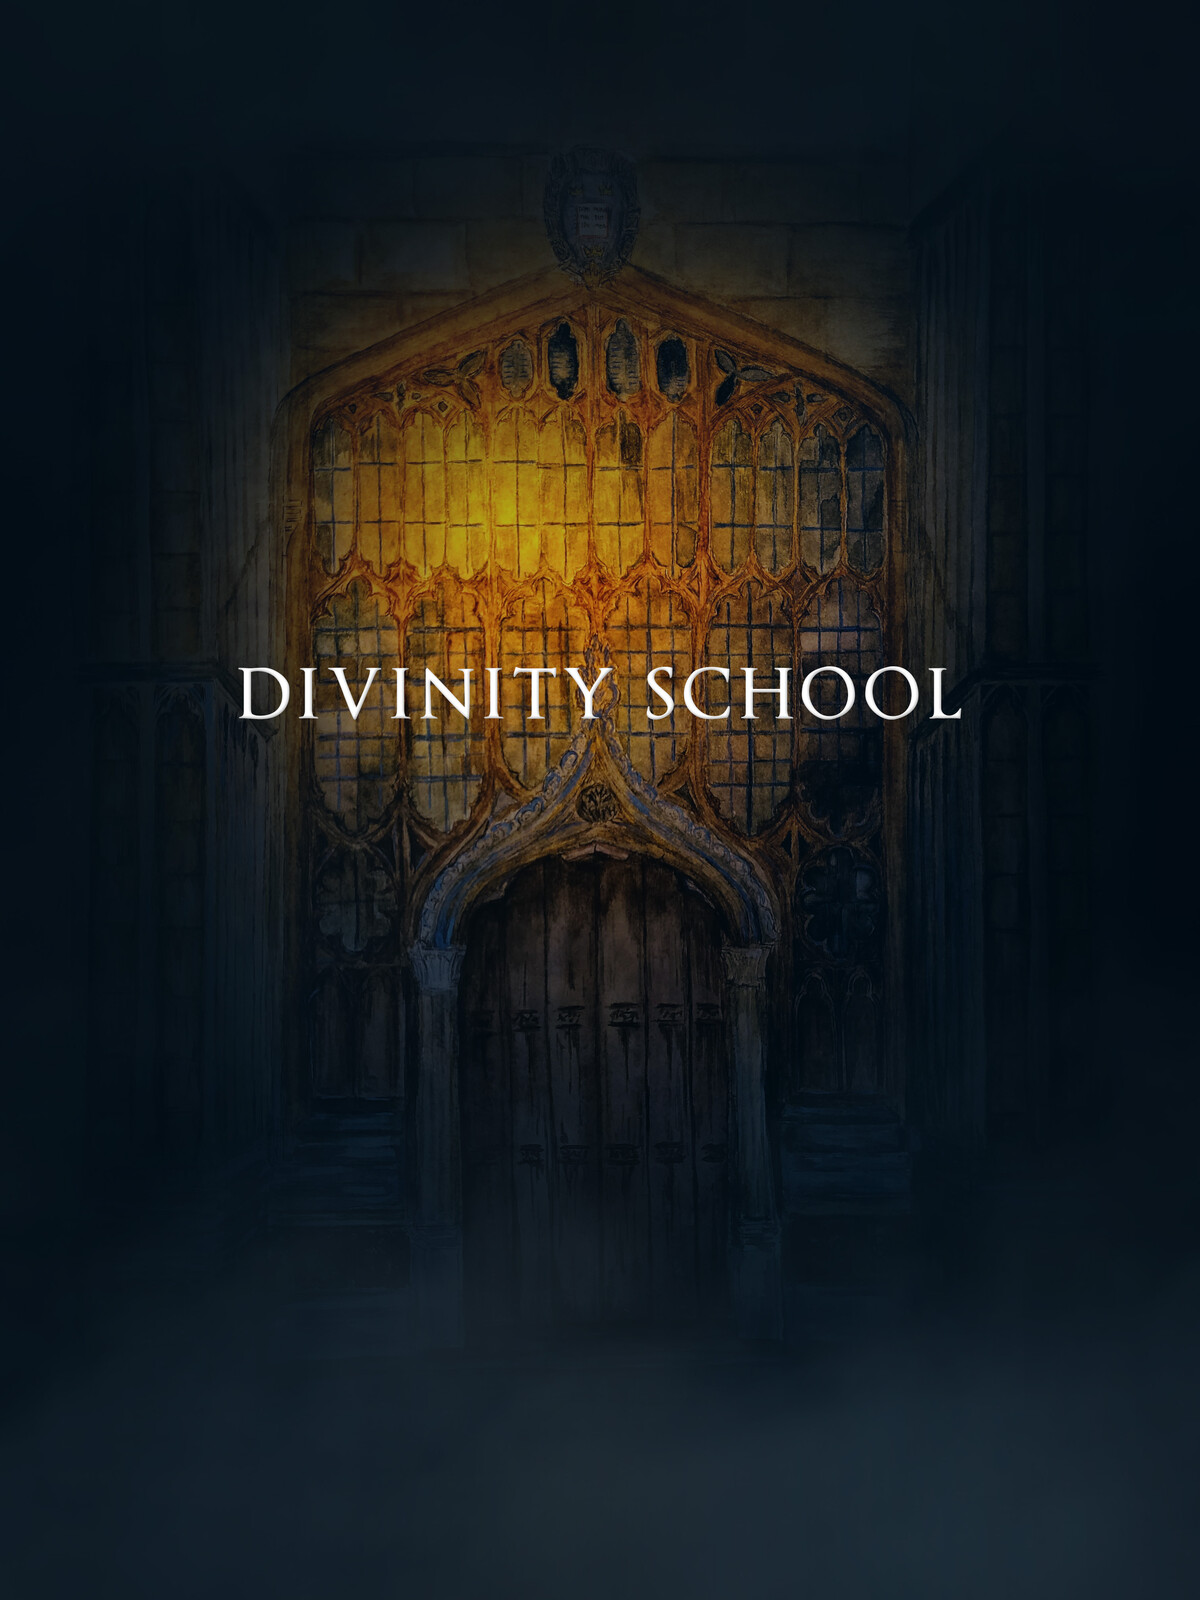 Divinity School, Oxford University